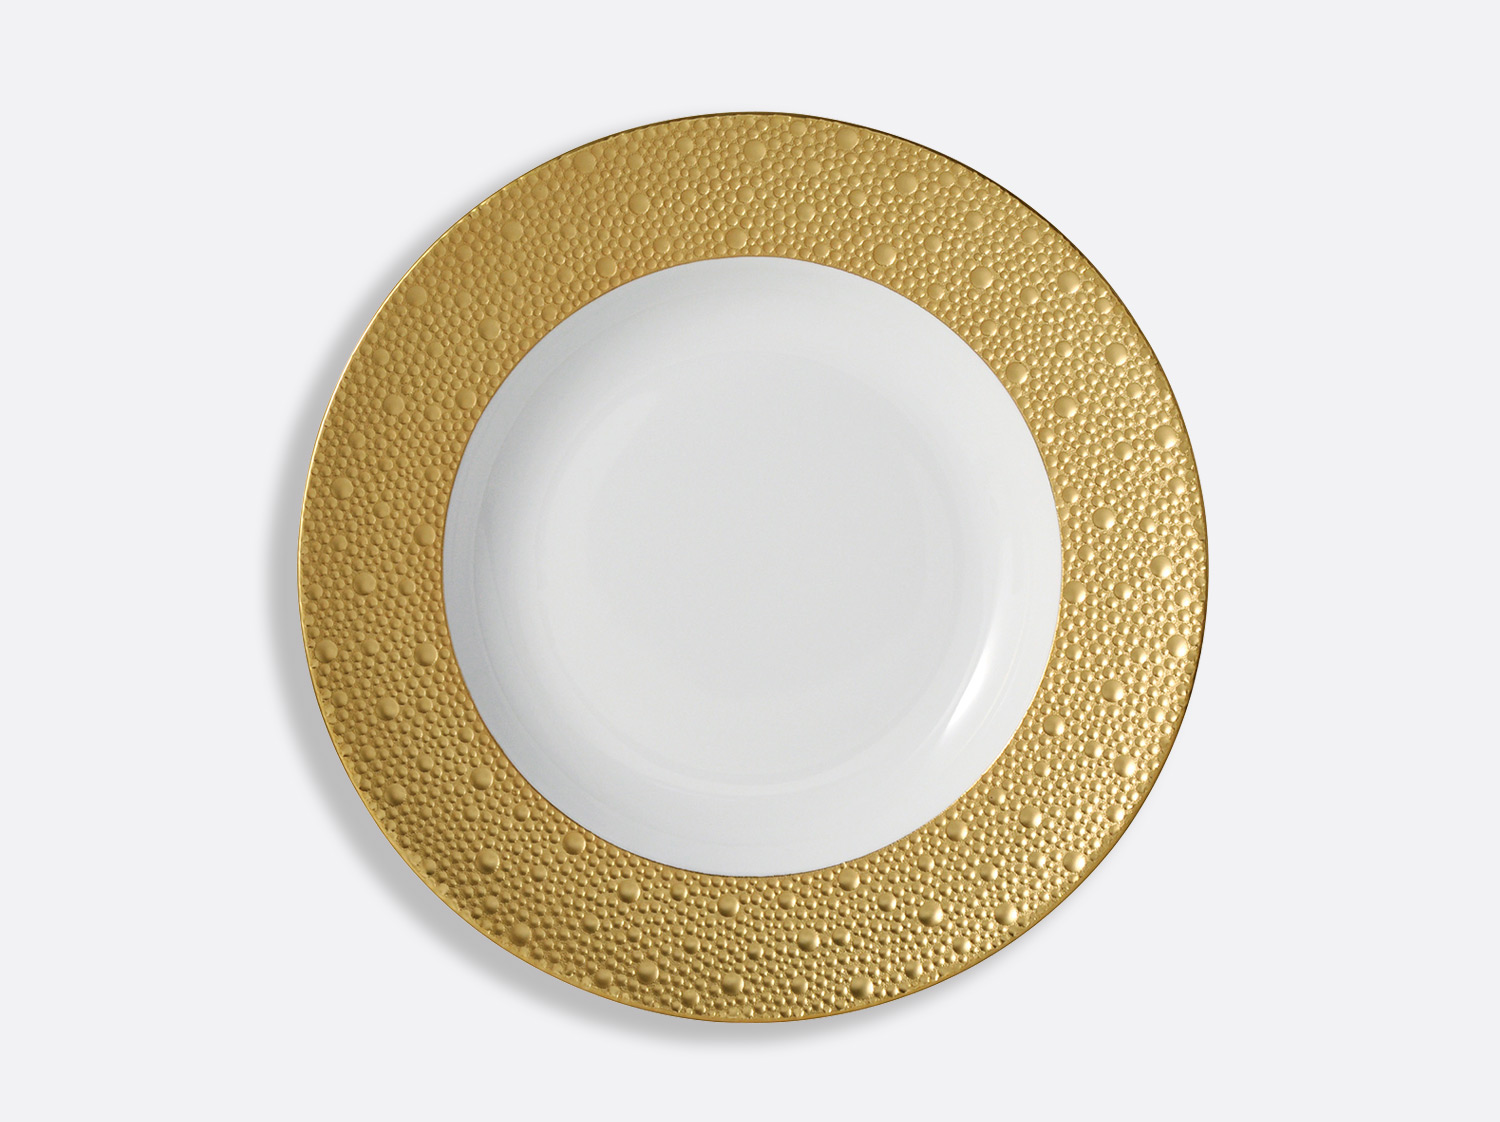 China Rim soup plate 23 cm of the collection Ecume gold | Bernardaud